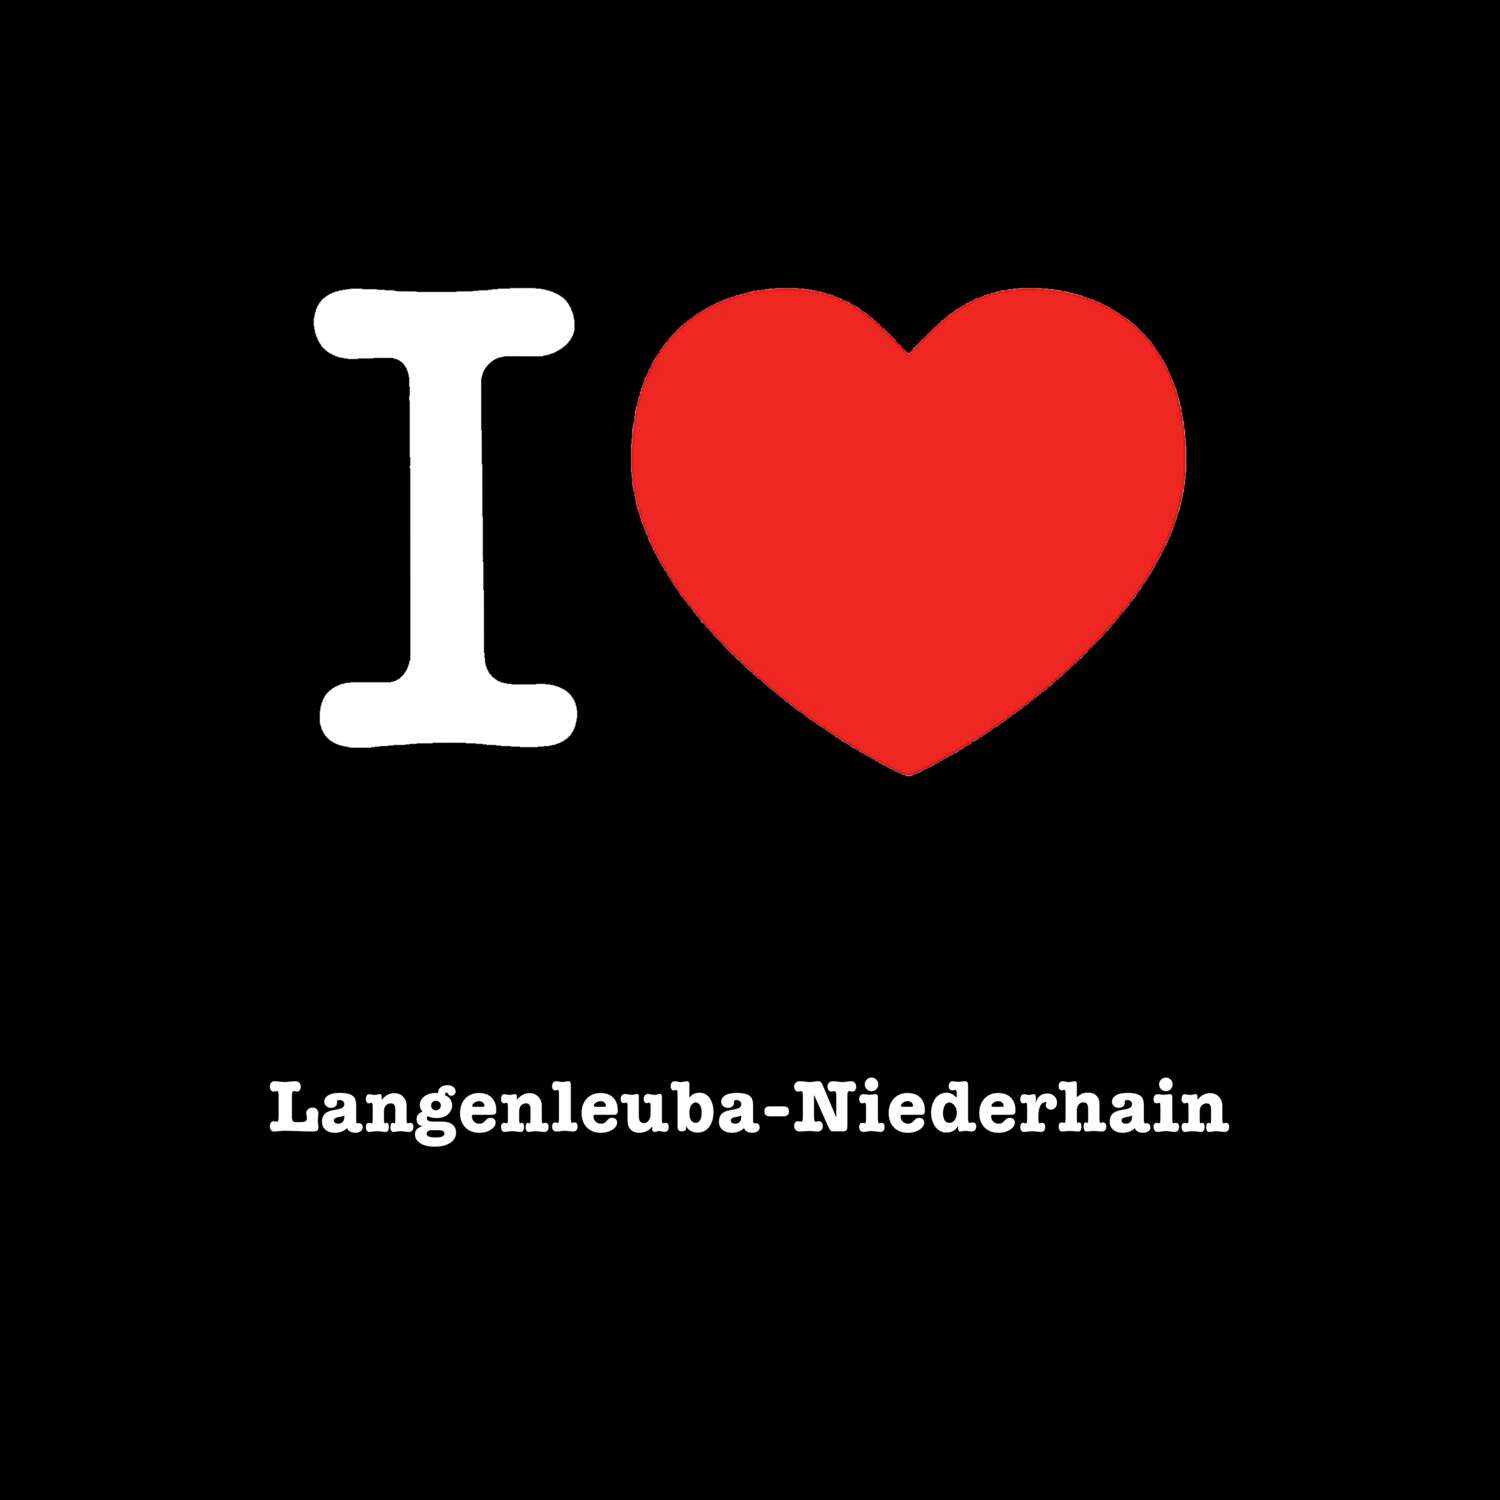 Langenleuba-Niederhain T-Shirt »I love«